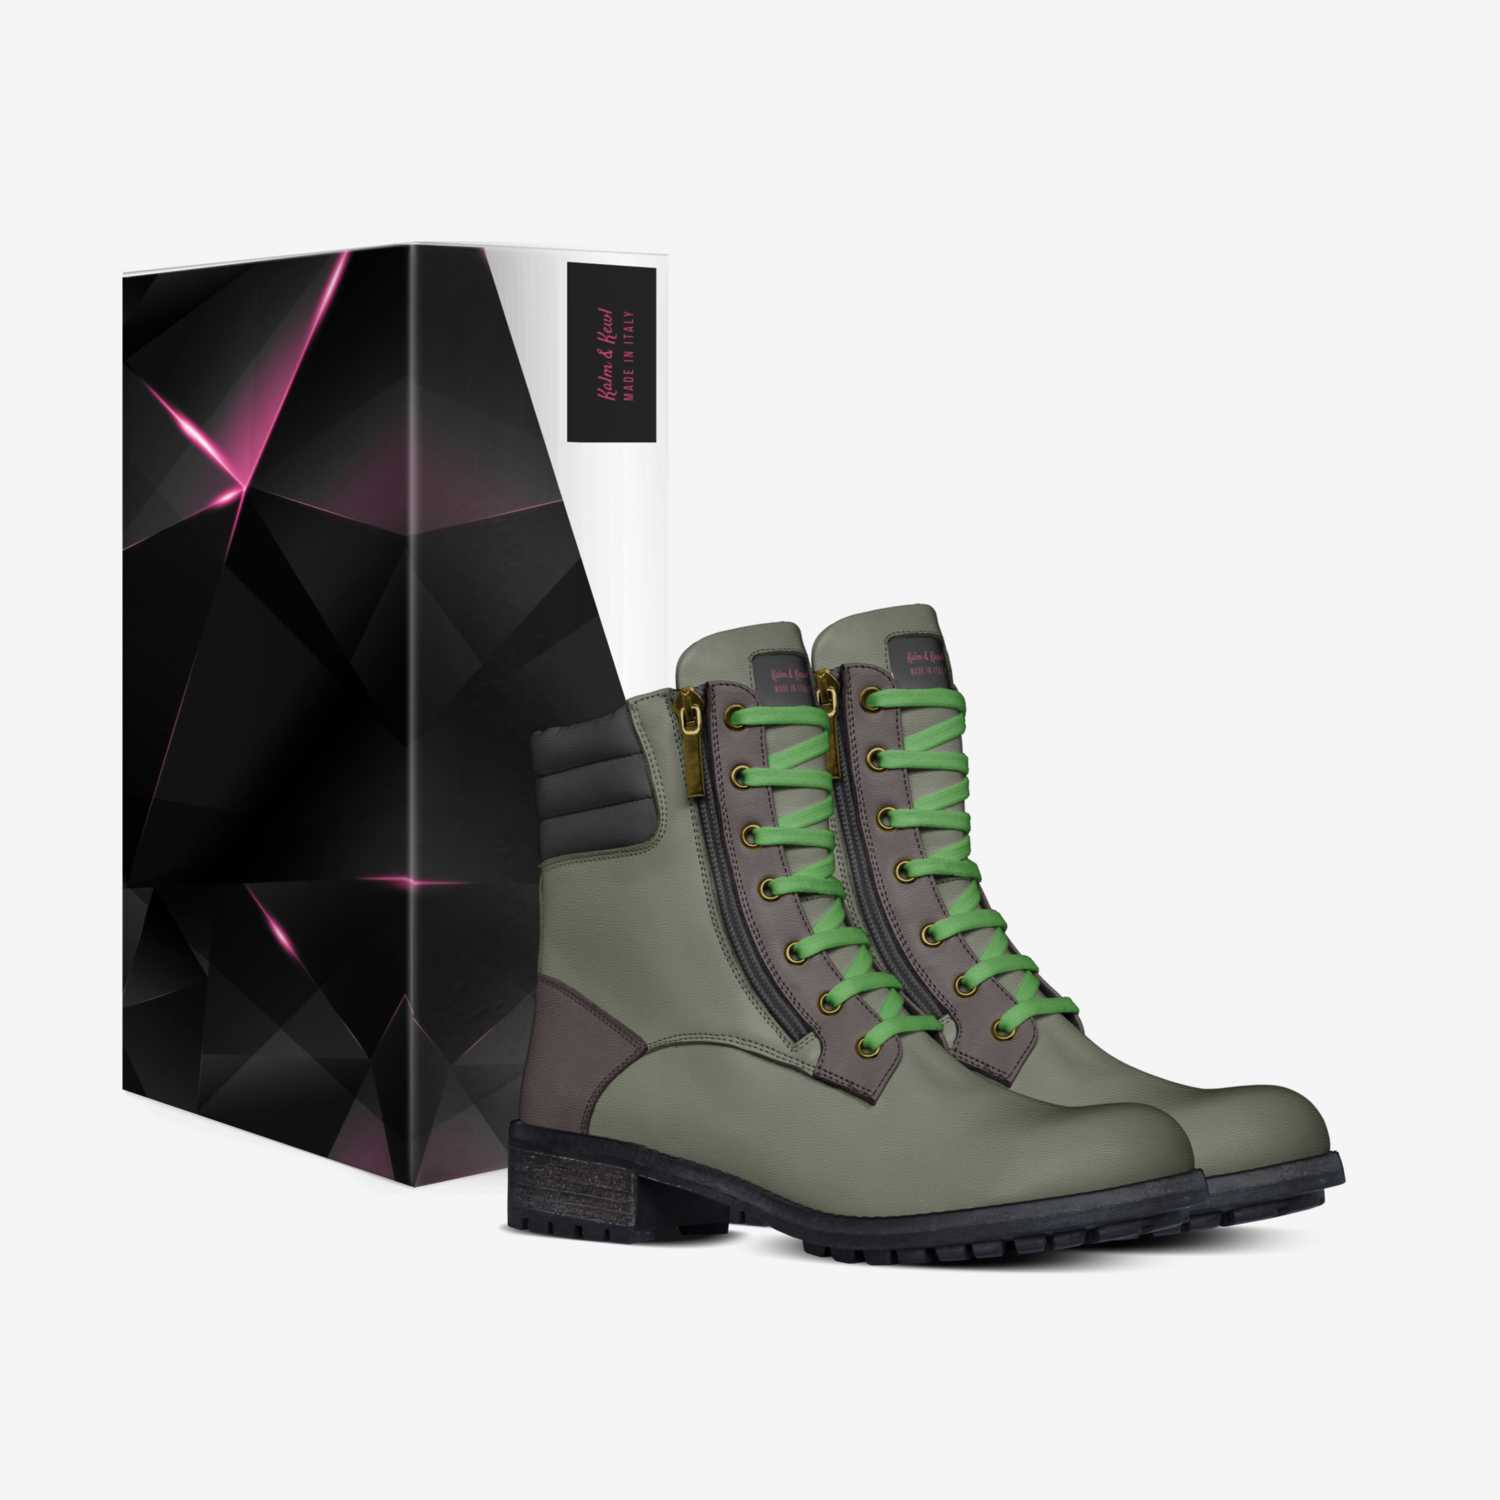 Kalm & Kewl custom made in Italy shoes by Haorulan | Box view